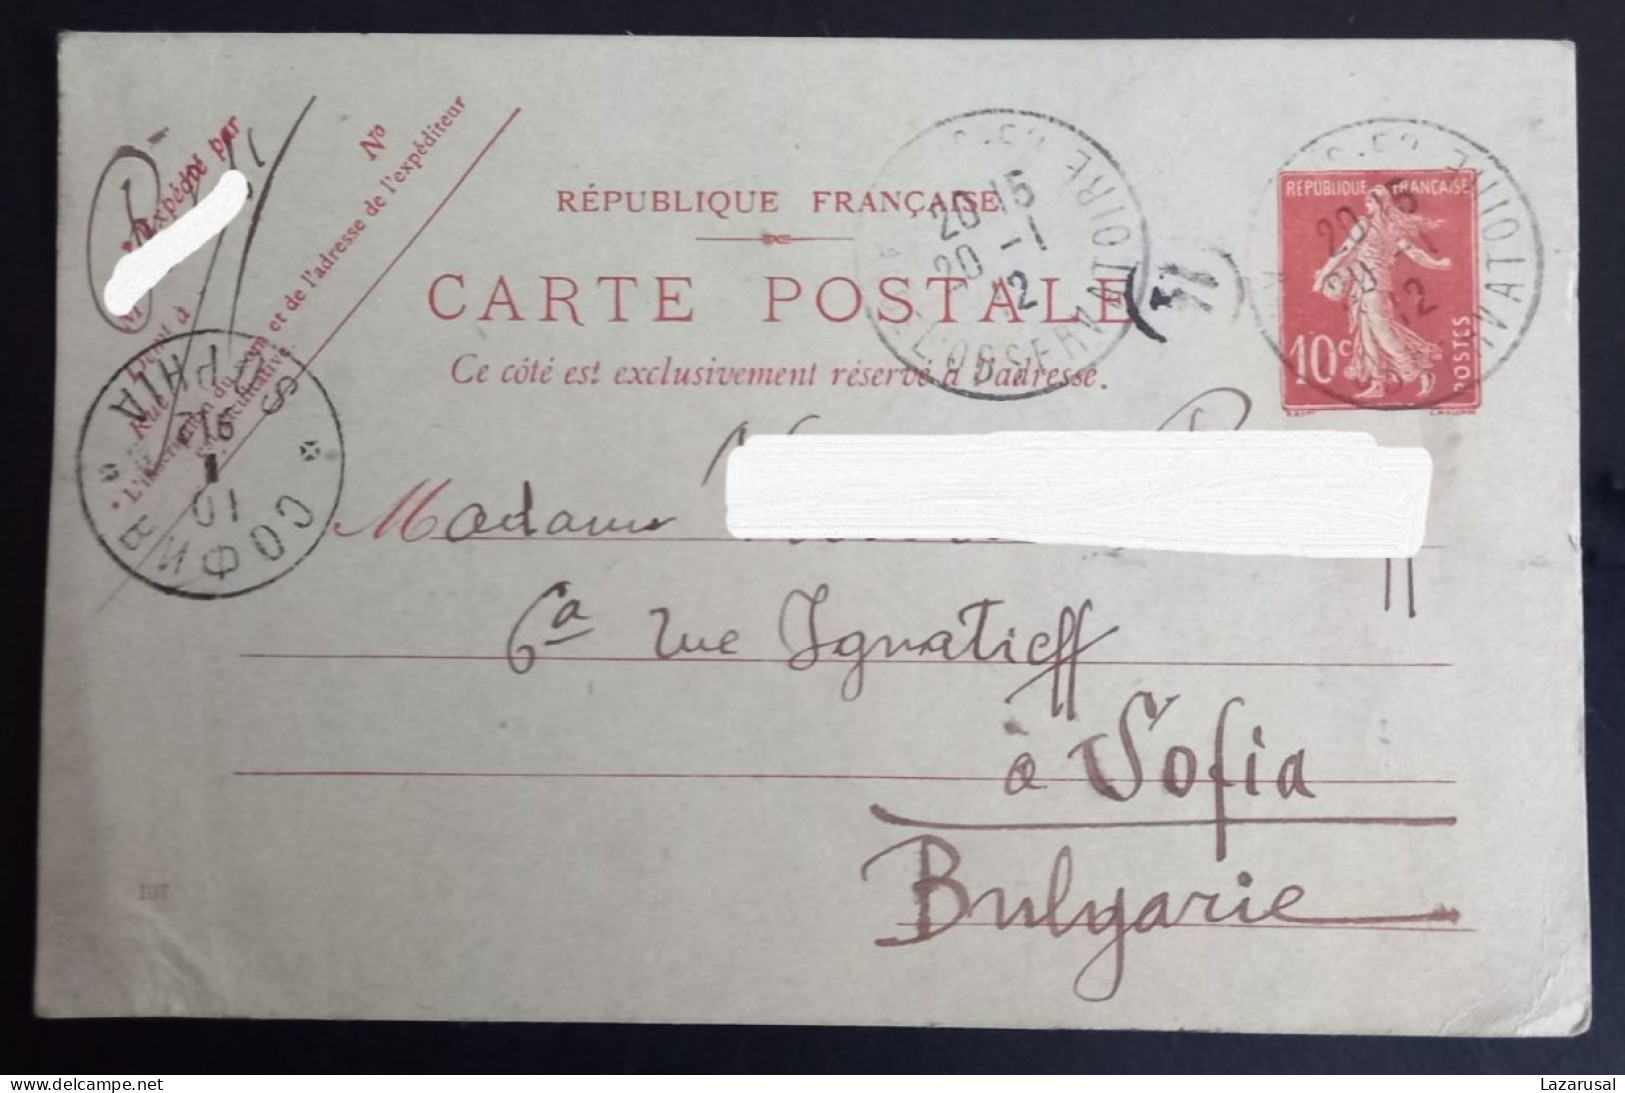 Lot #1  France Stationery Sent To Bulgaria Sofia Balkan War 1912 - Cartes-lettres